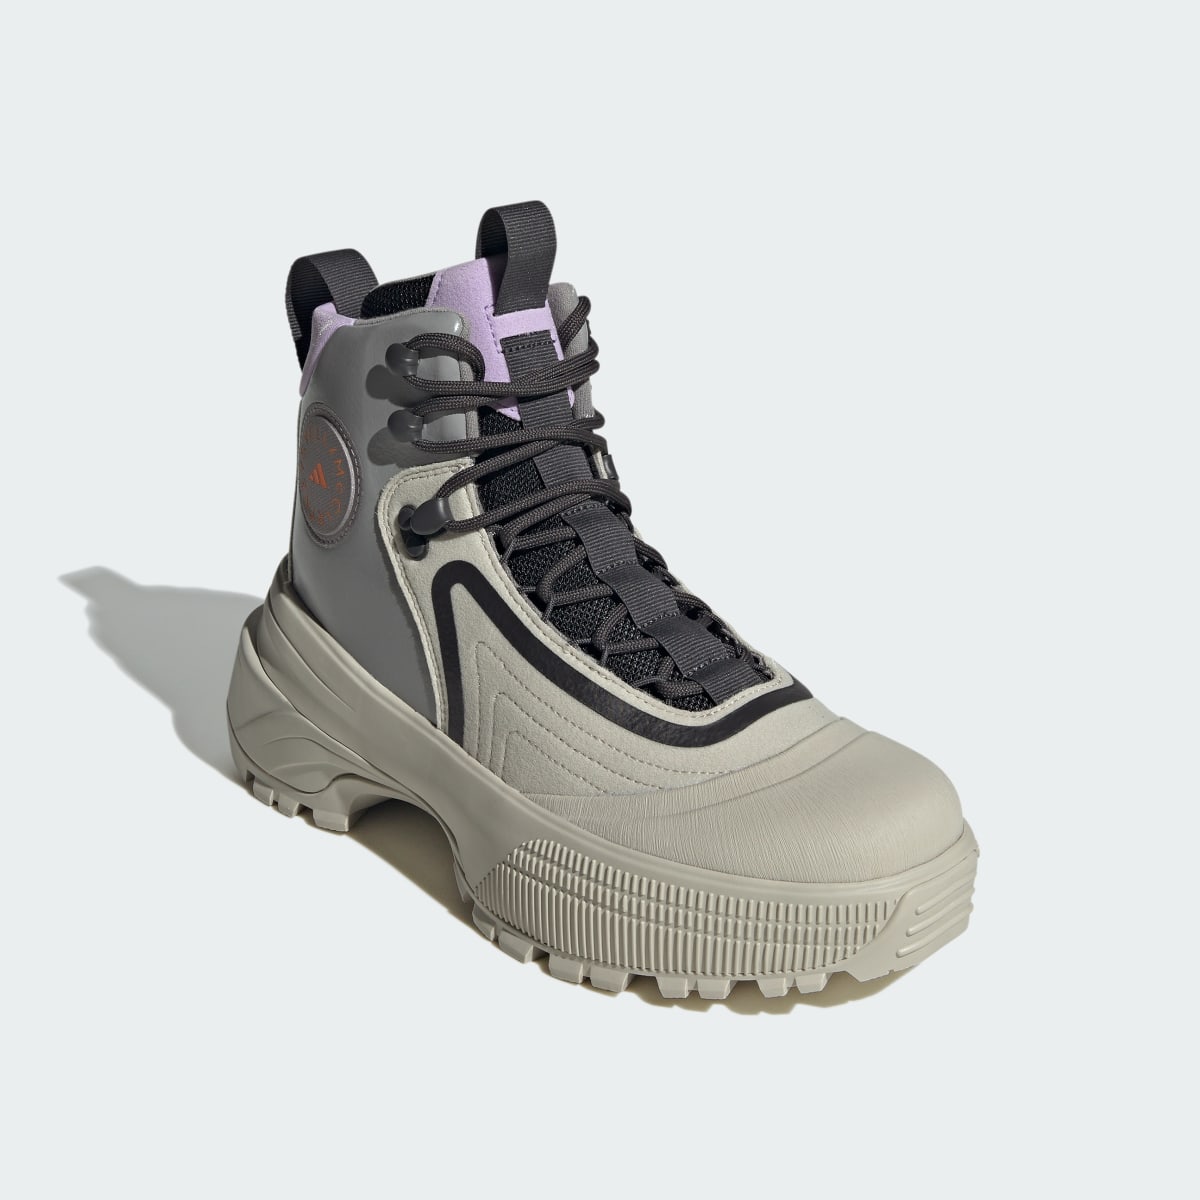 Adidas by Stella McCartney x Terrex Hiking Boots. 10